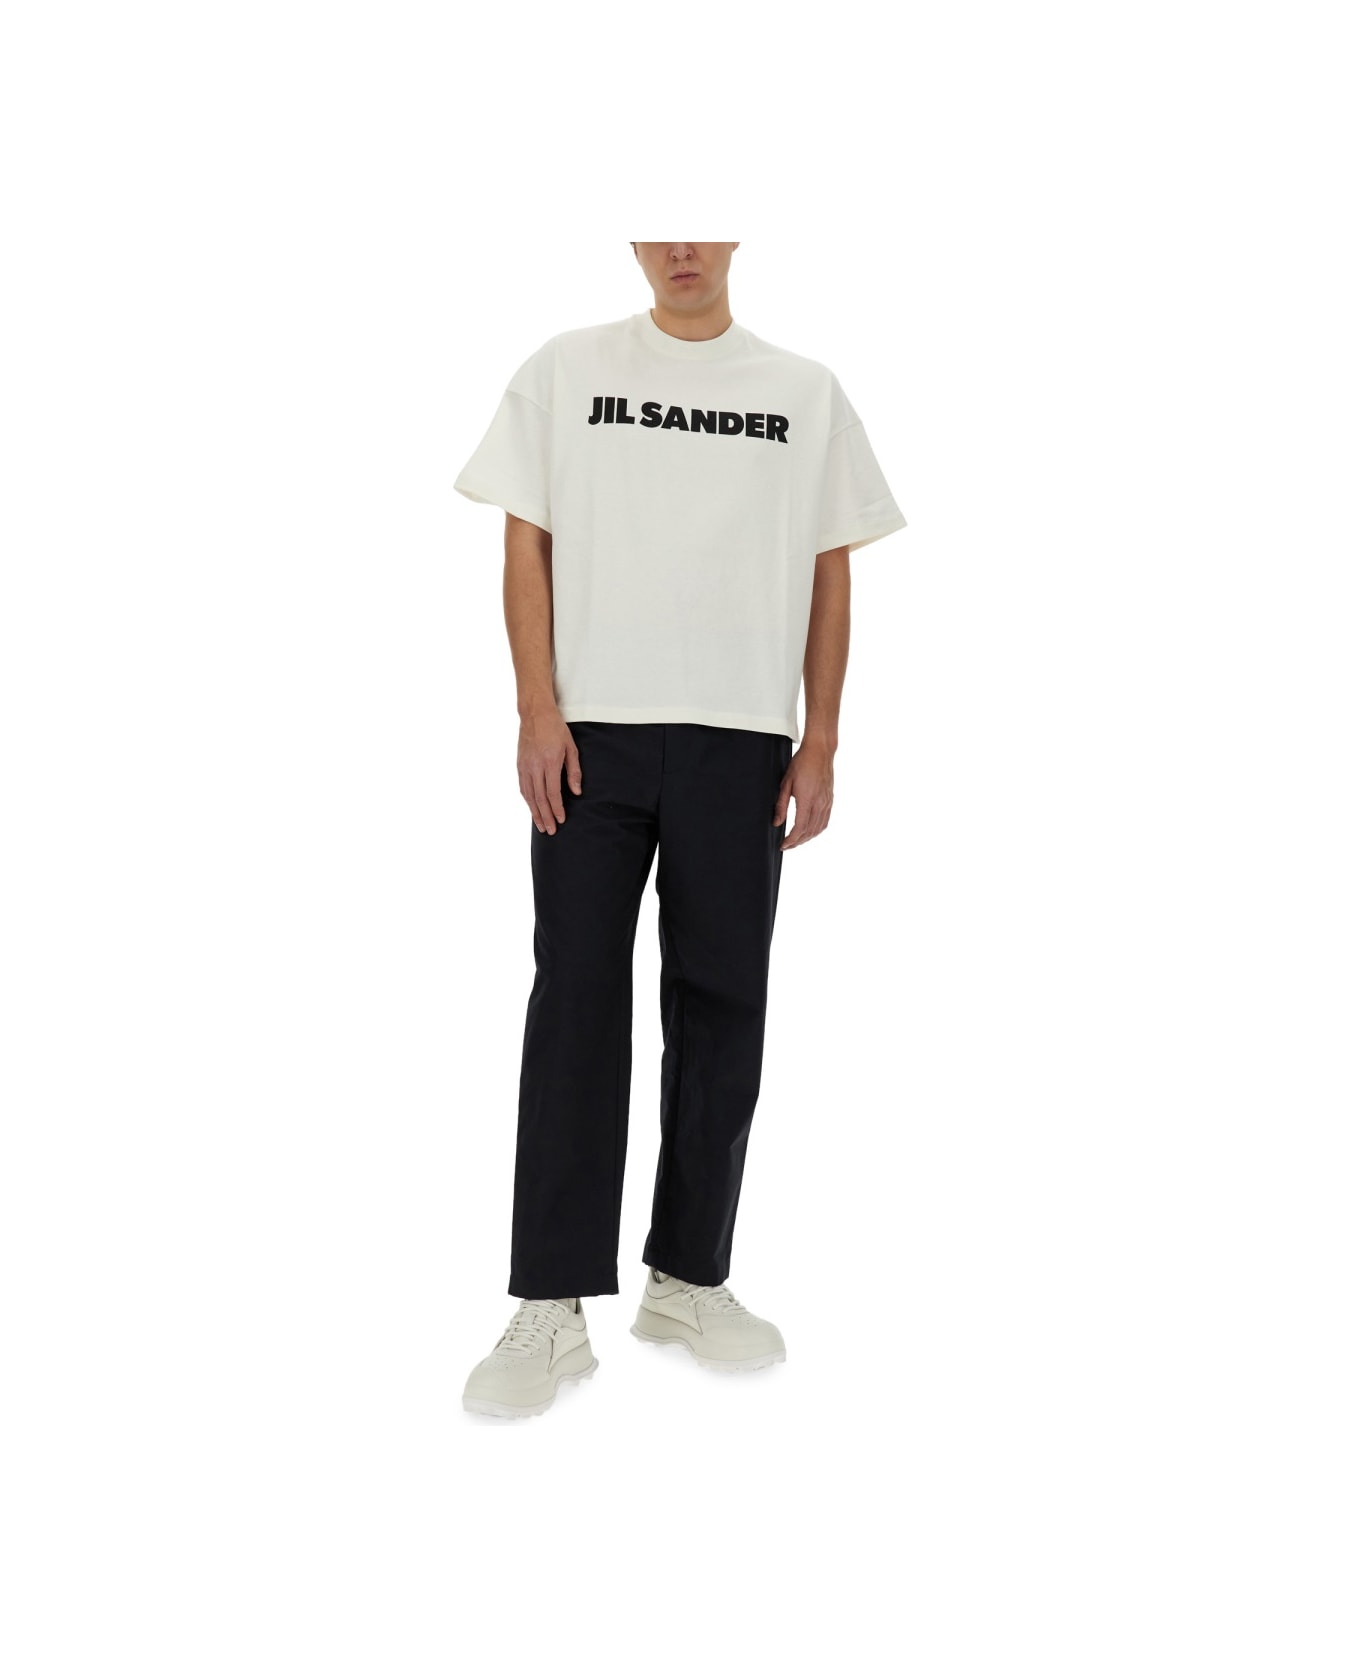 Jil Sander T-shirt With Print - IVORY